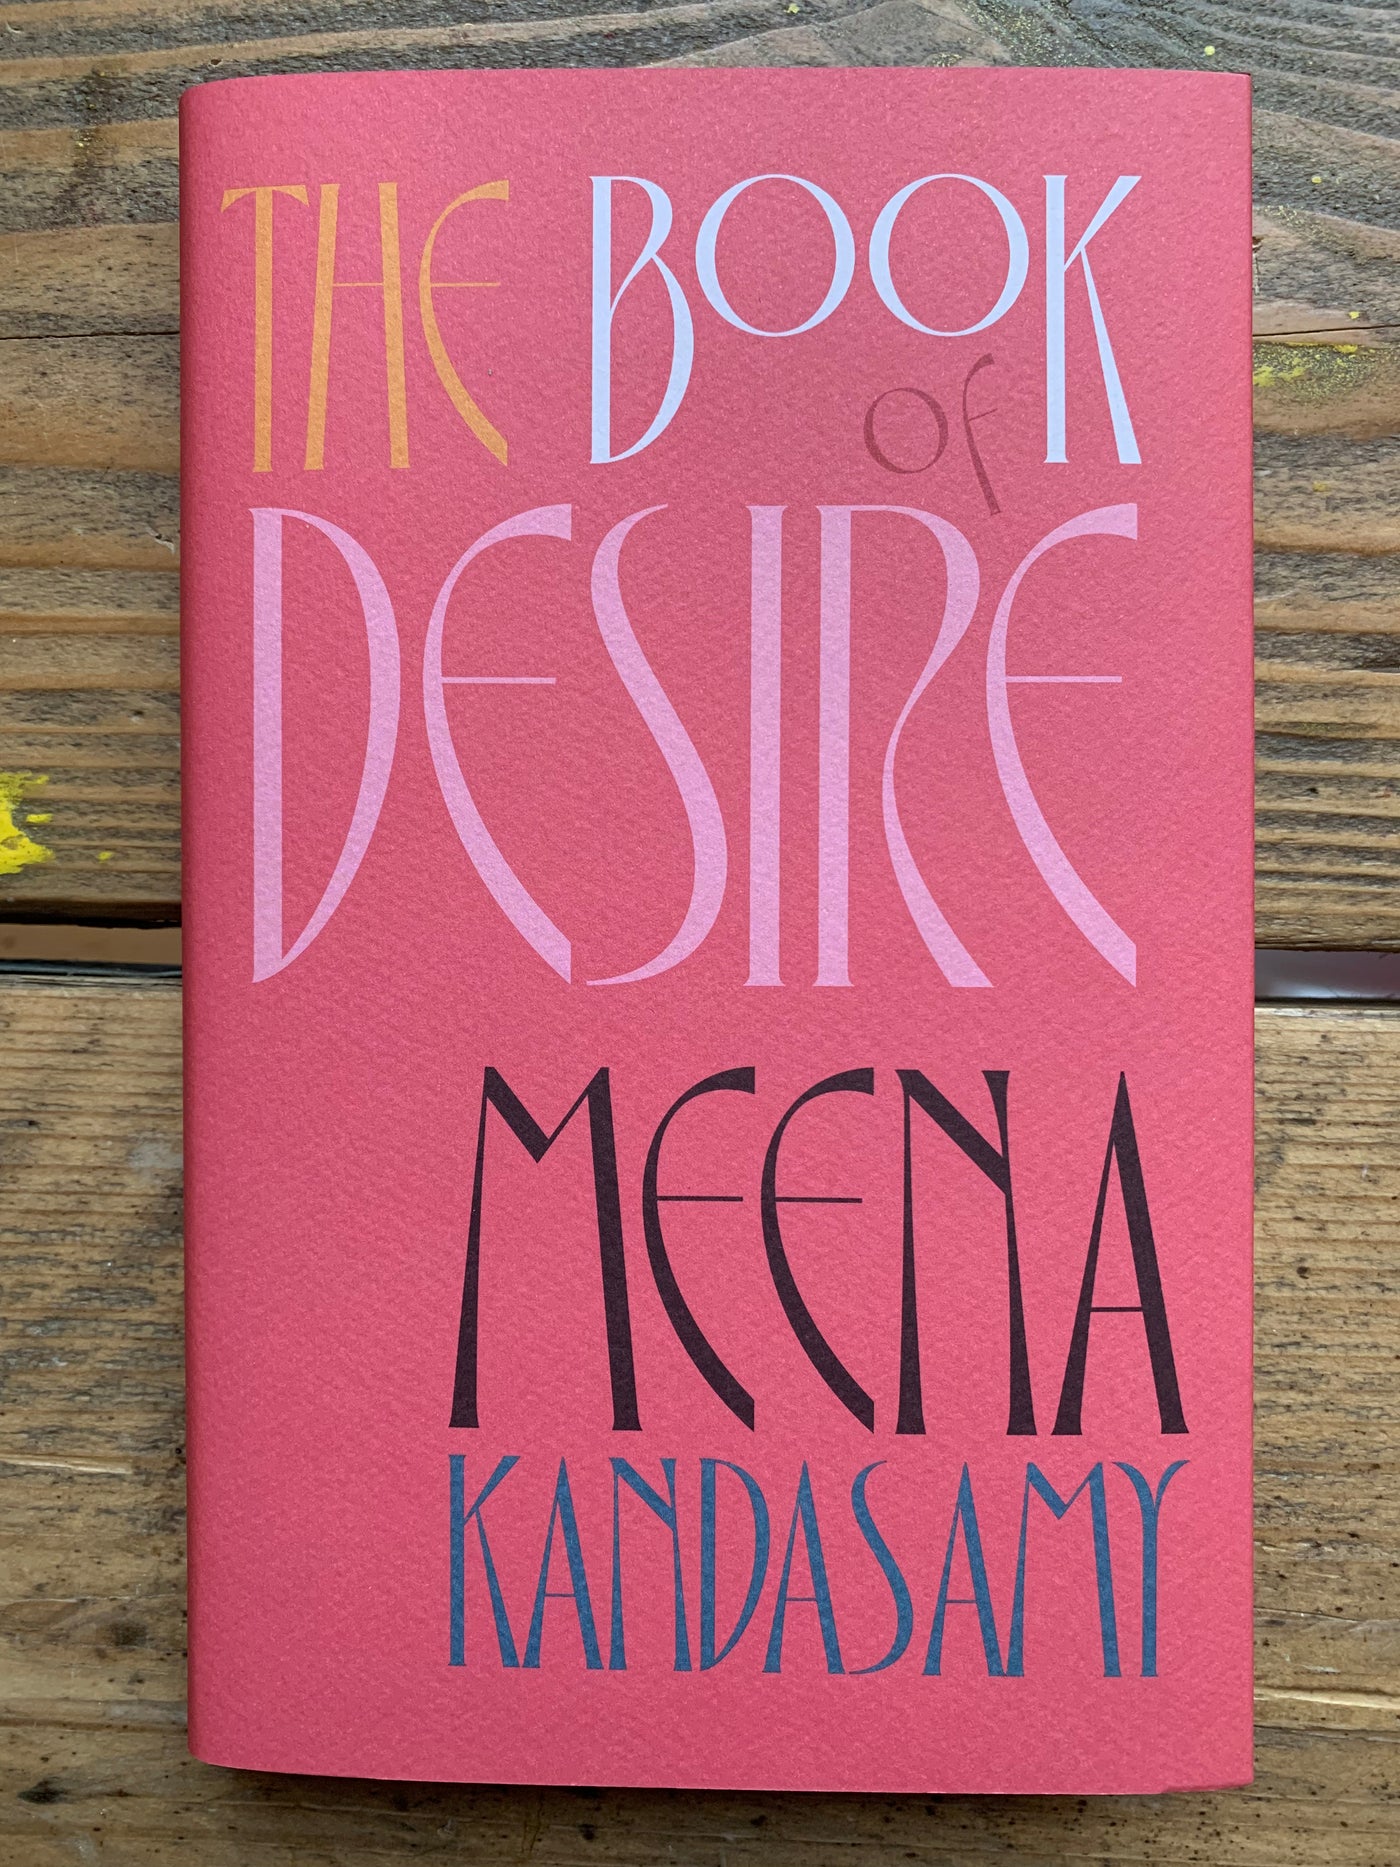 The Book of Desire